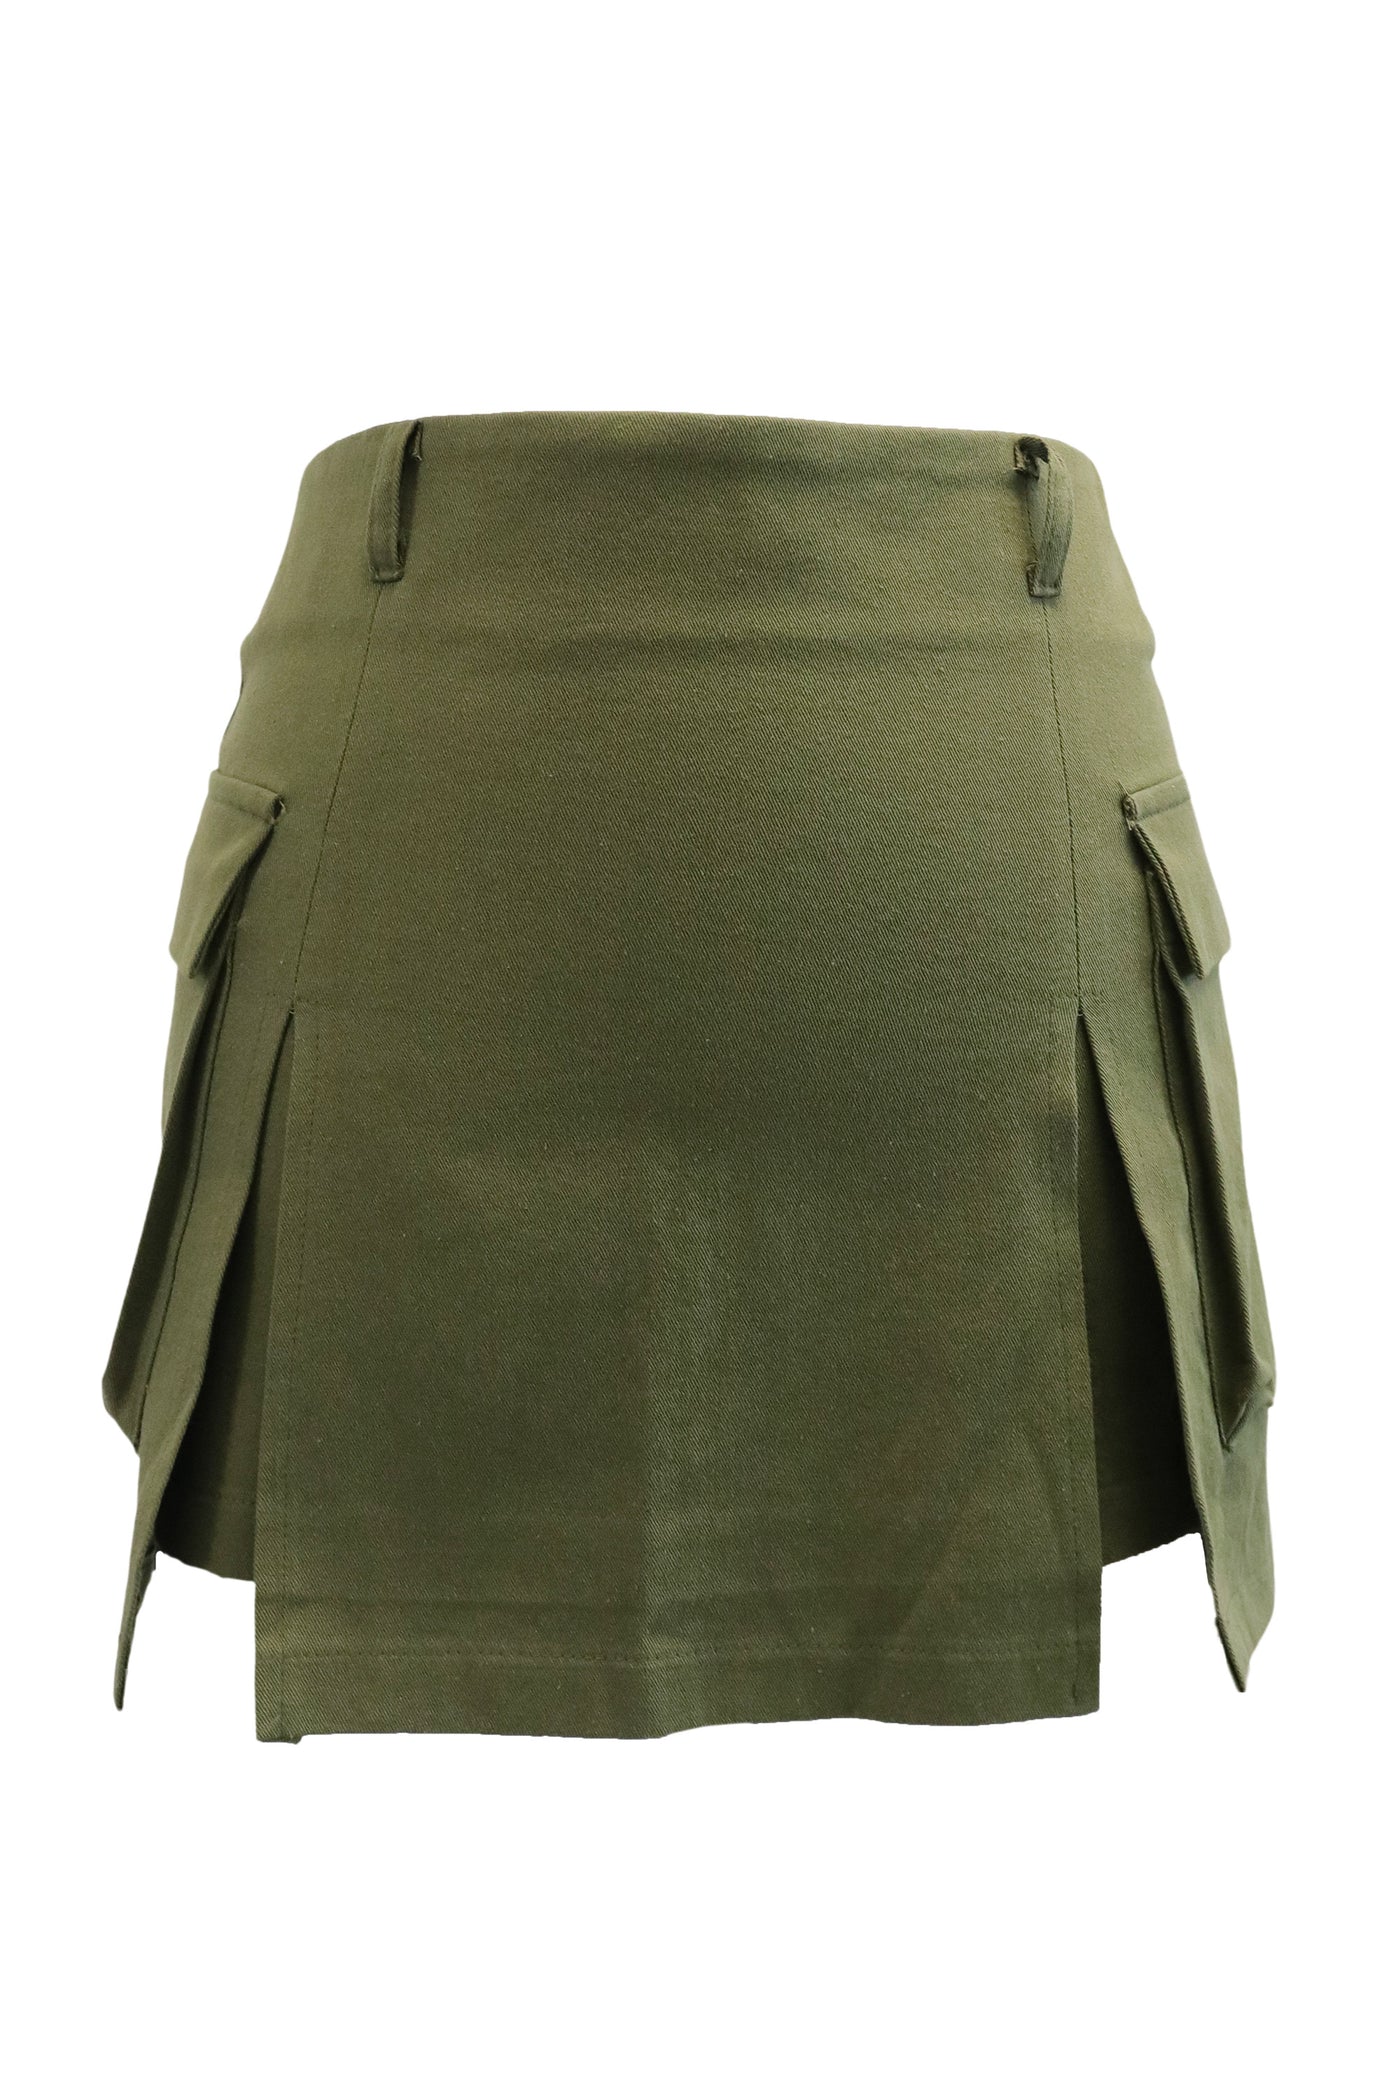 storets.com Arlie Front Slit Cargo Skirt